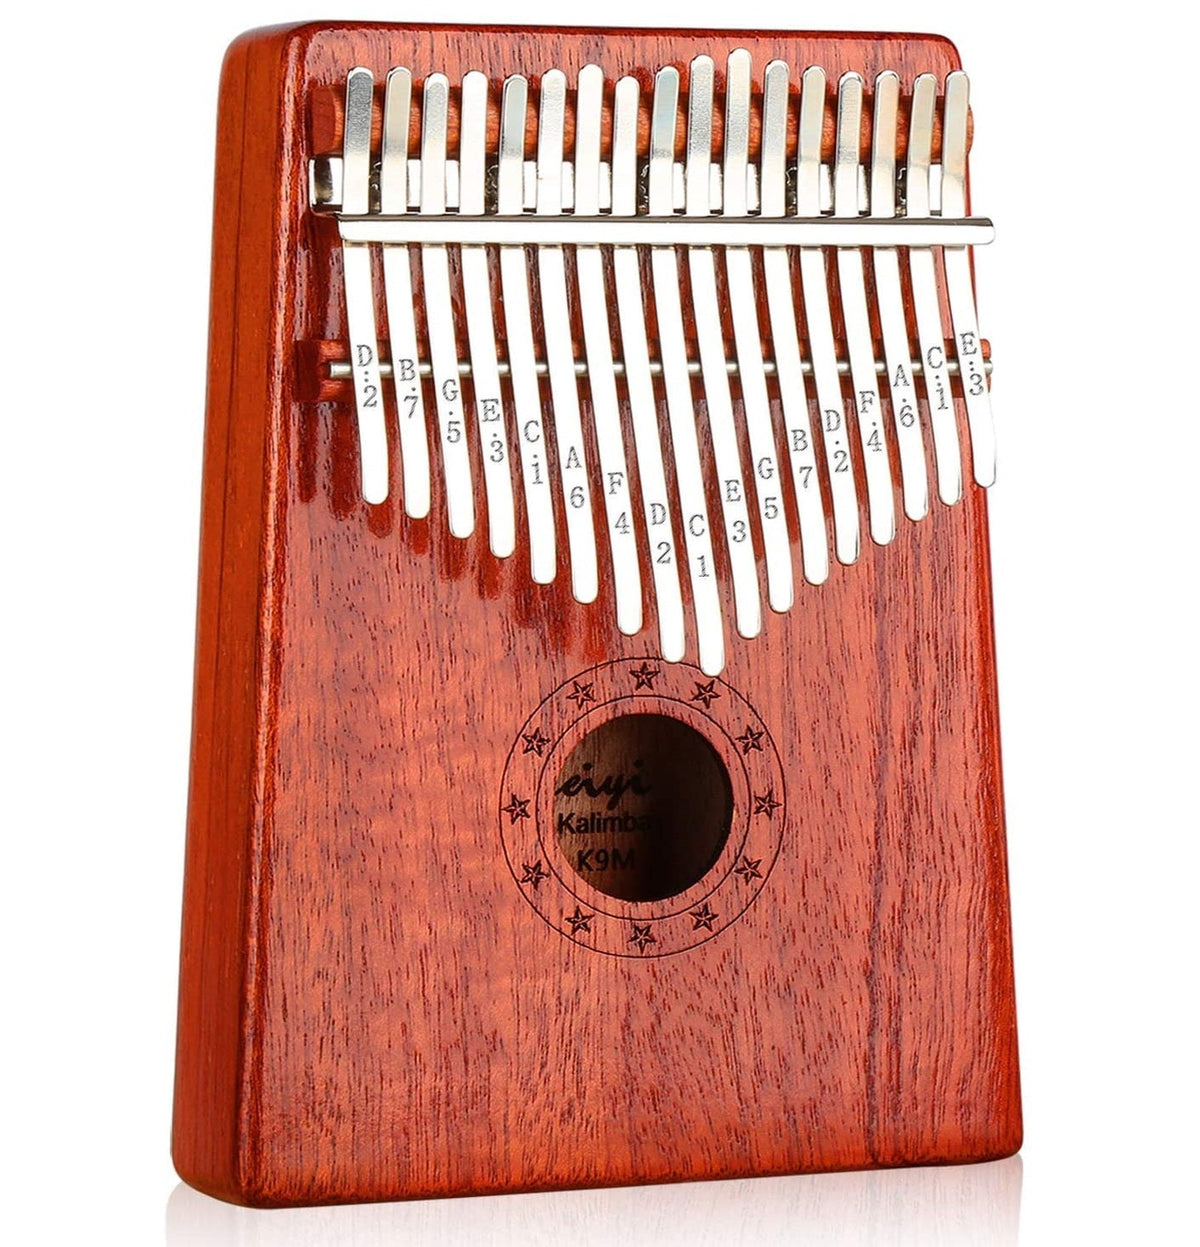 Instrument muzical din lemn cu incinta si 17 note, Kalimba, mini-pian